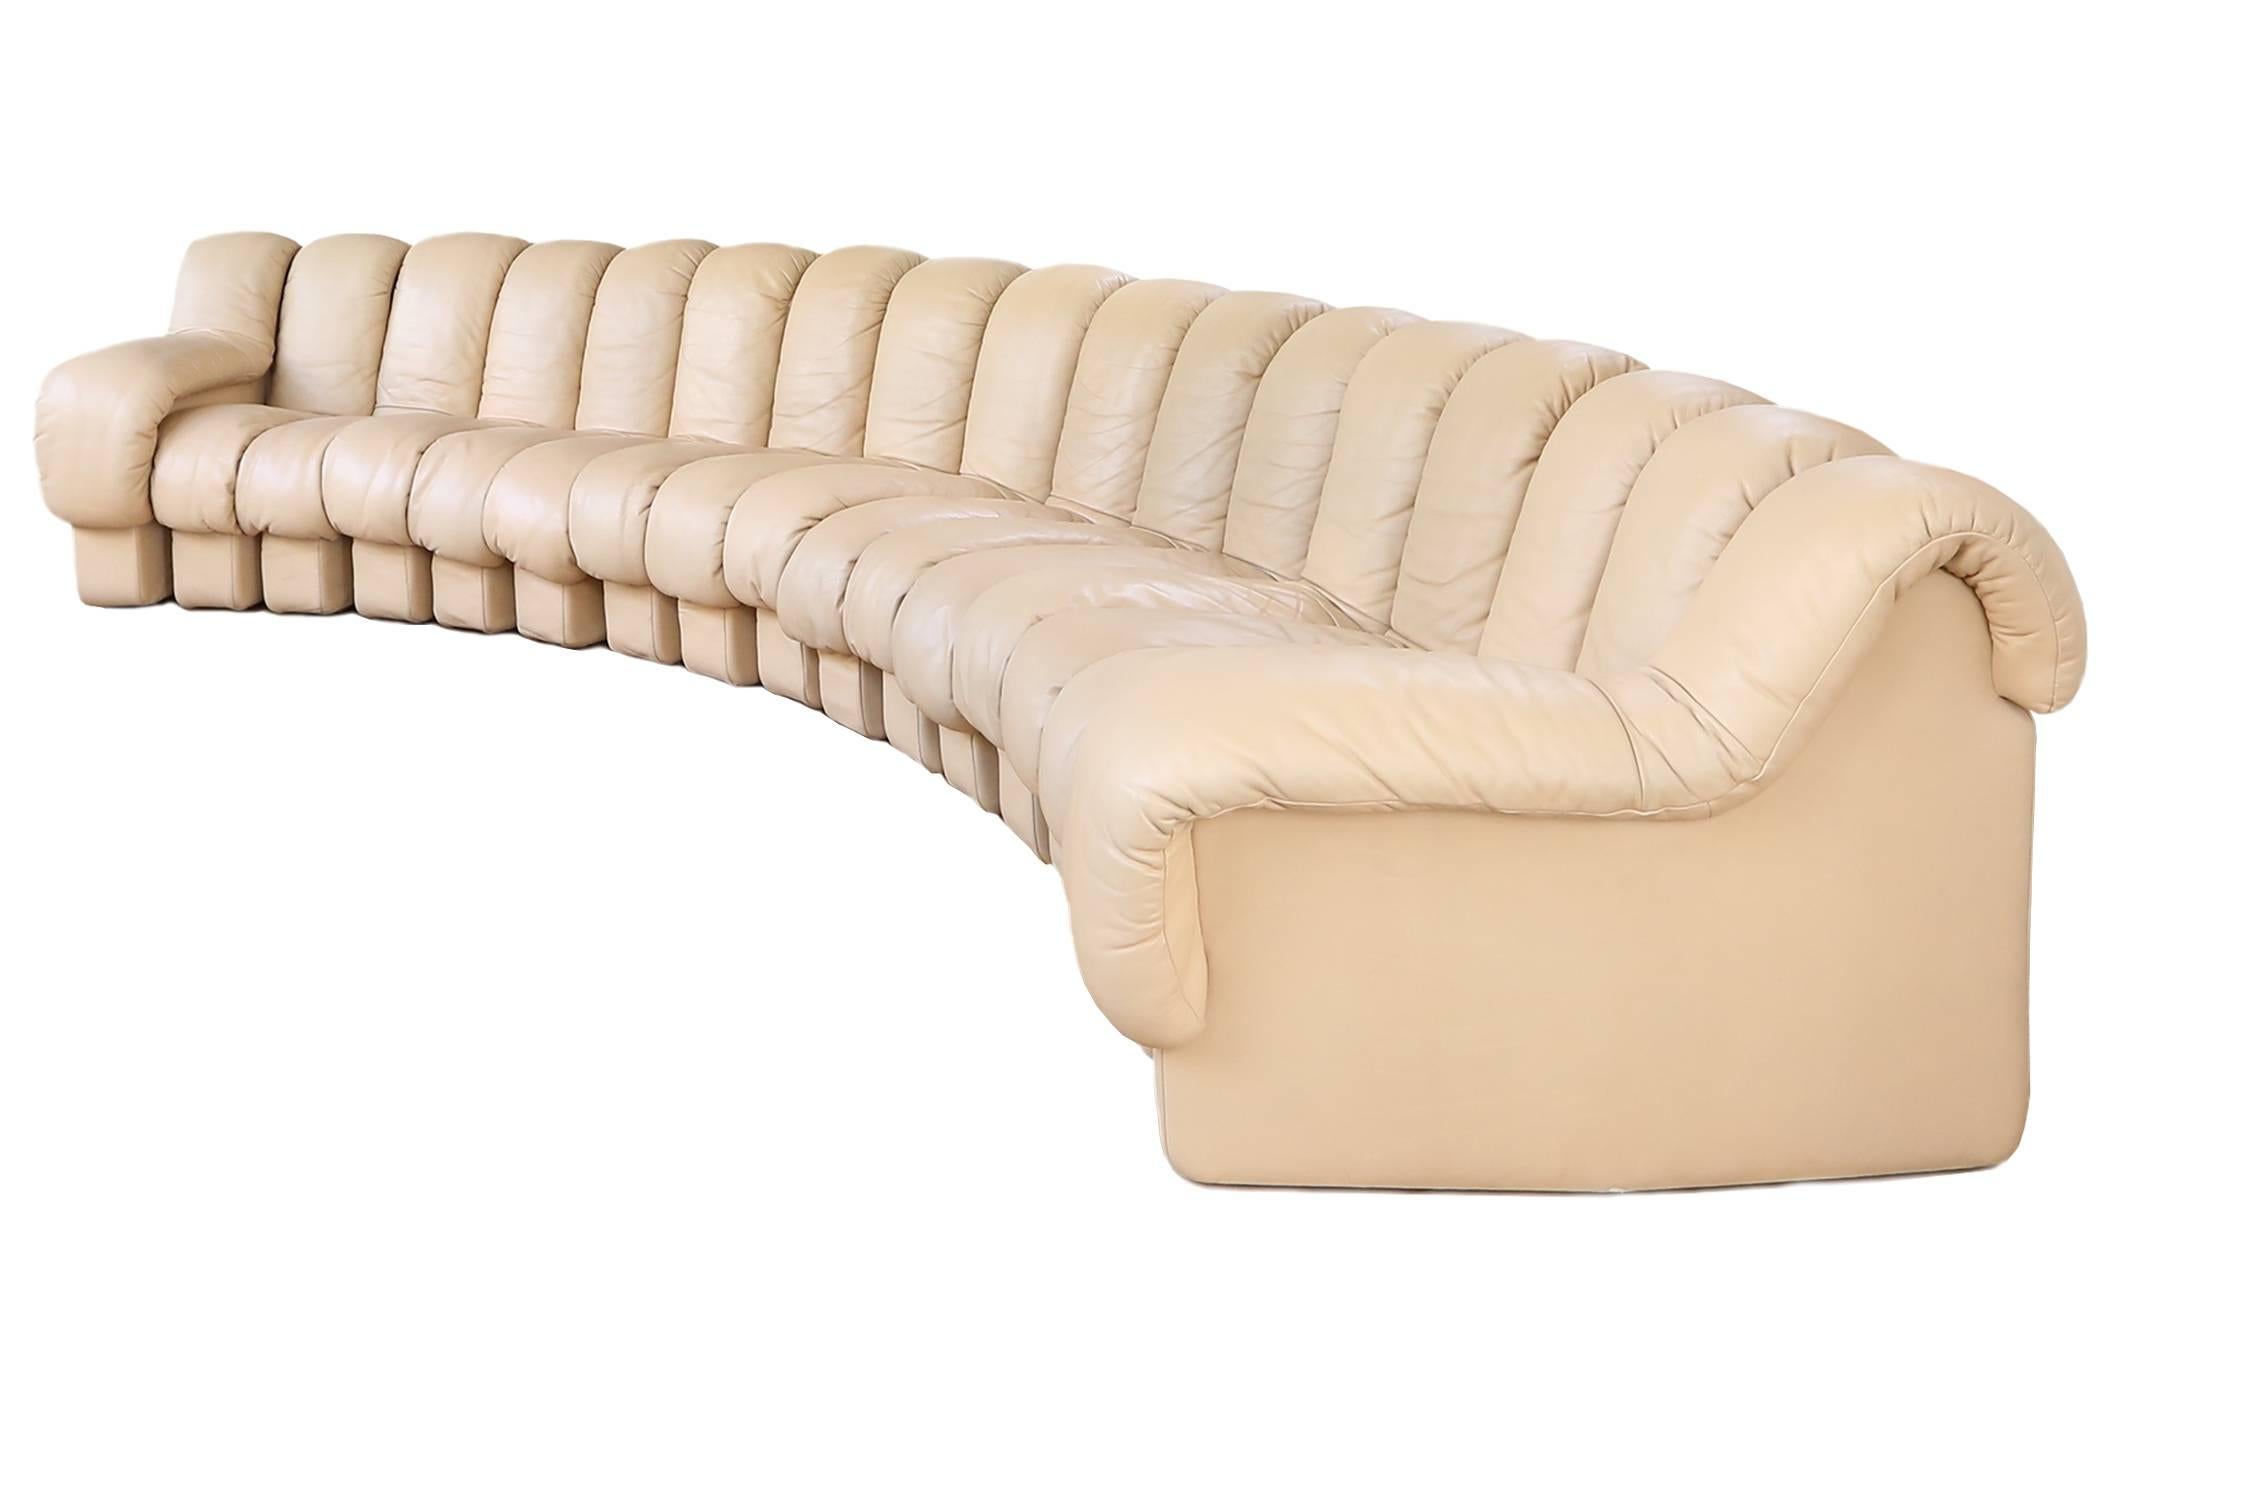 De Sede sofa 'non-stop'
model DS 600 ¬ aka the snake
full cream leather version
Switzerland, 1980s.
Measures: L 450 cm.